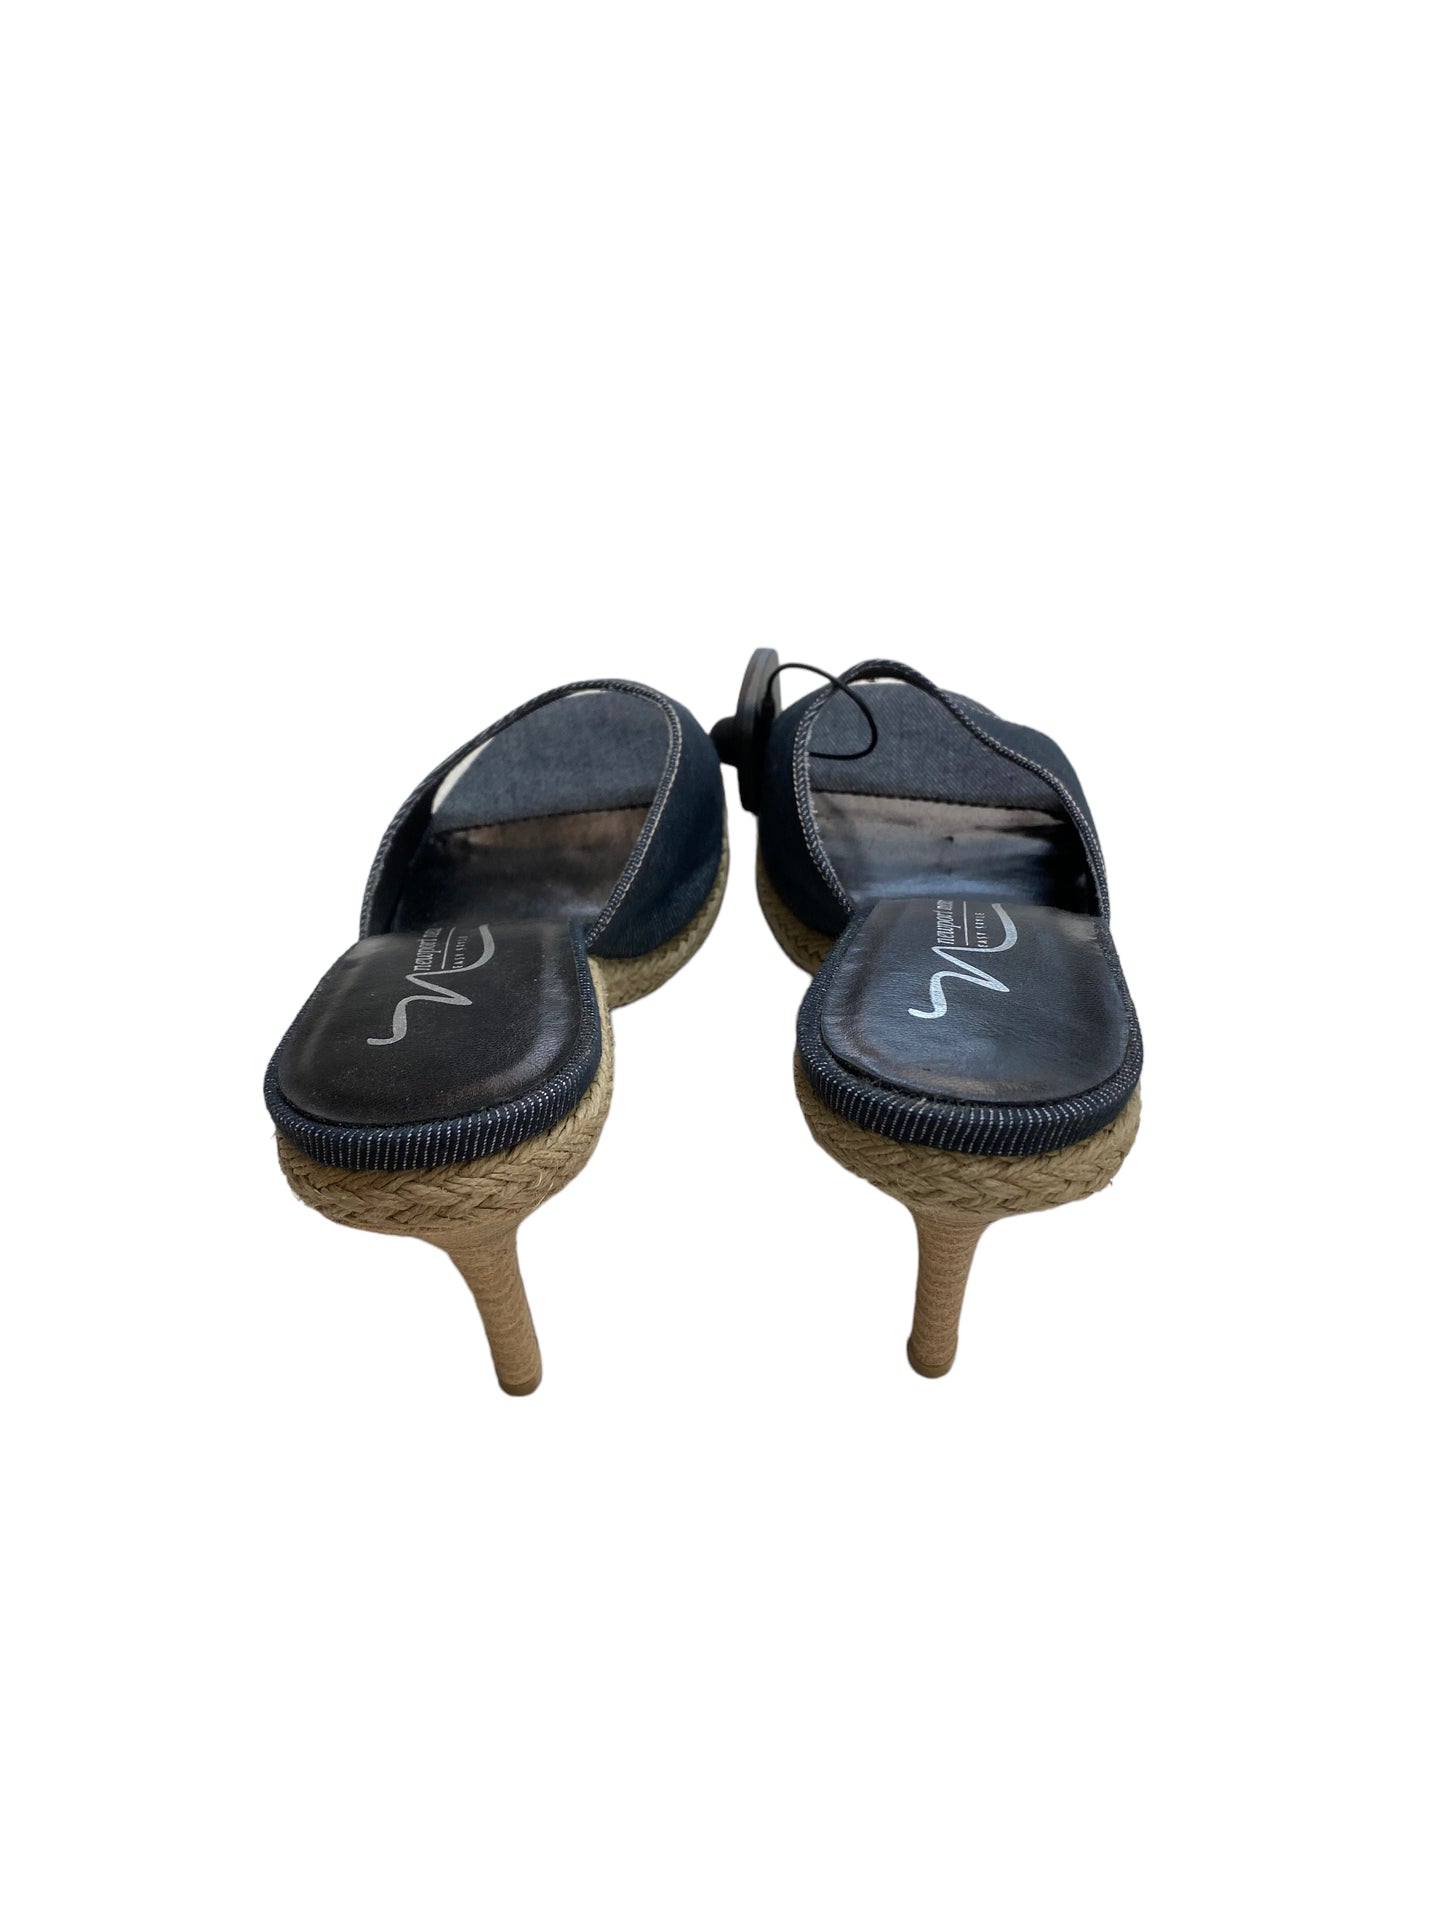 Multi-colored Sandals Heels Stiletto Newport News, Size 10